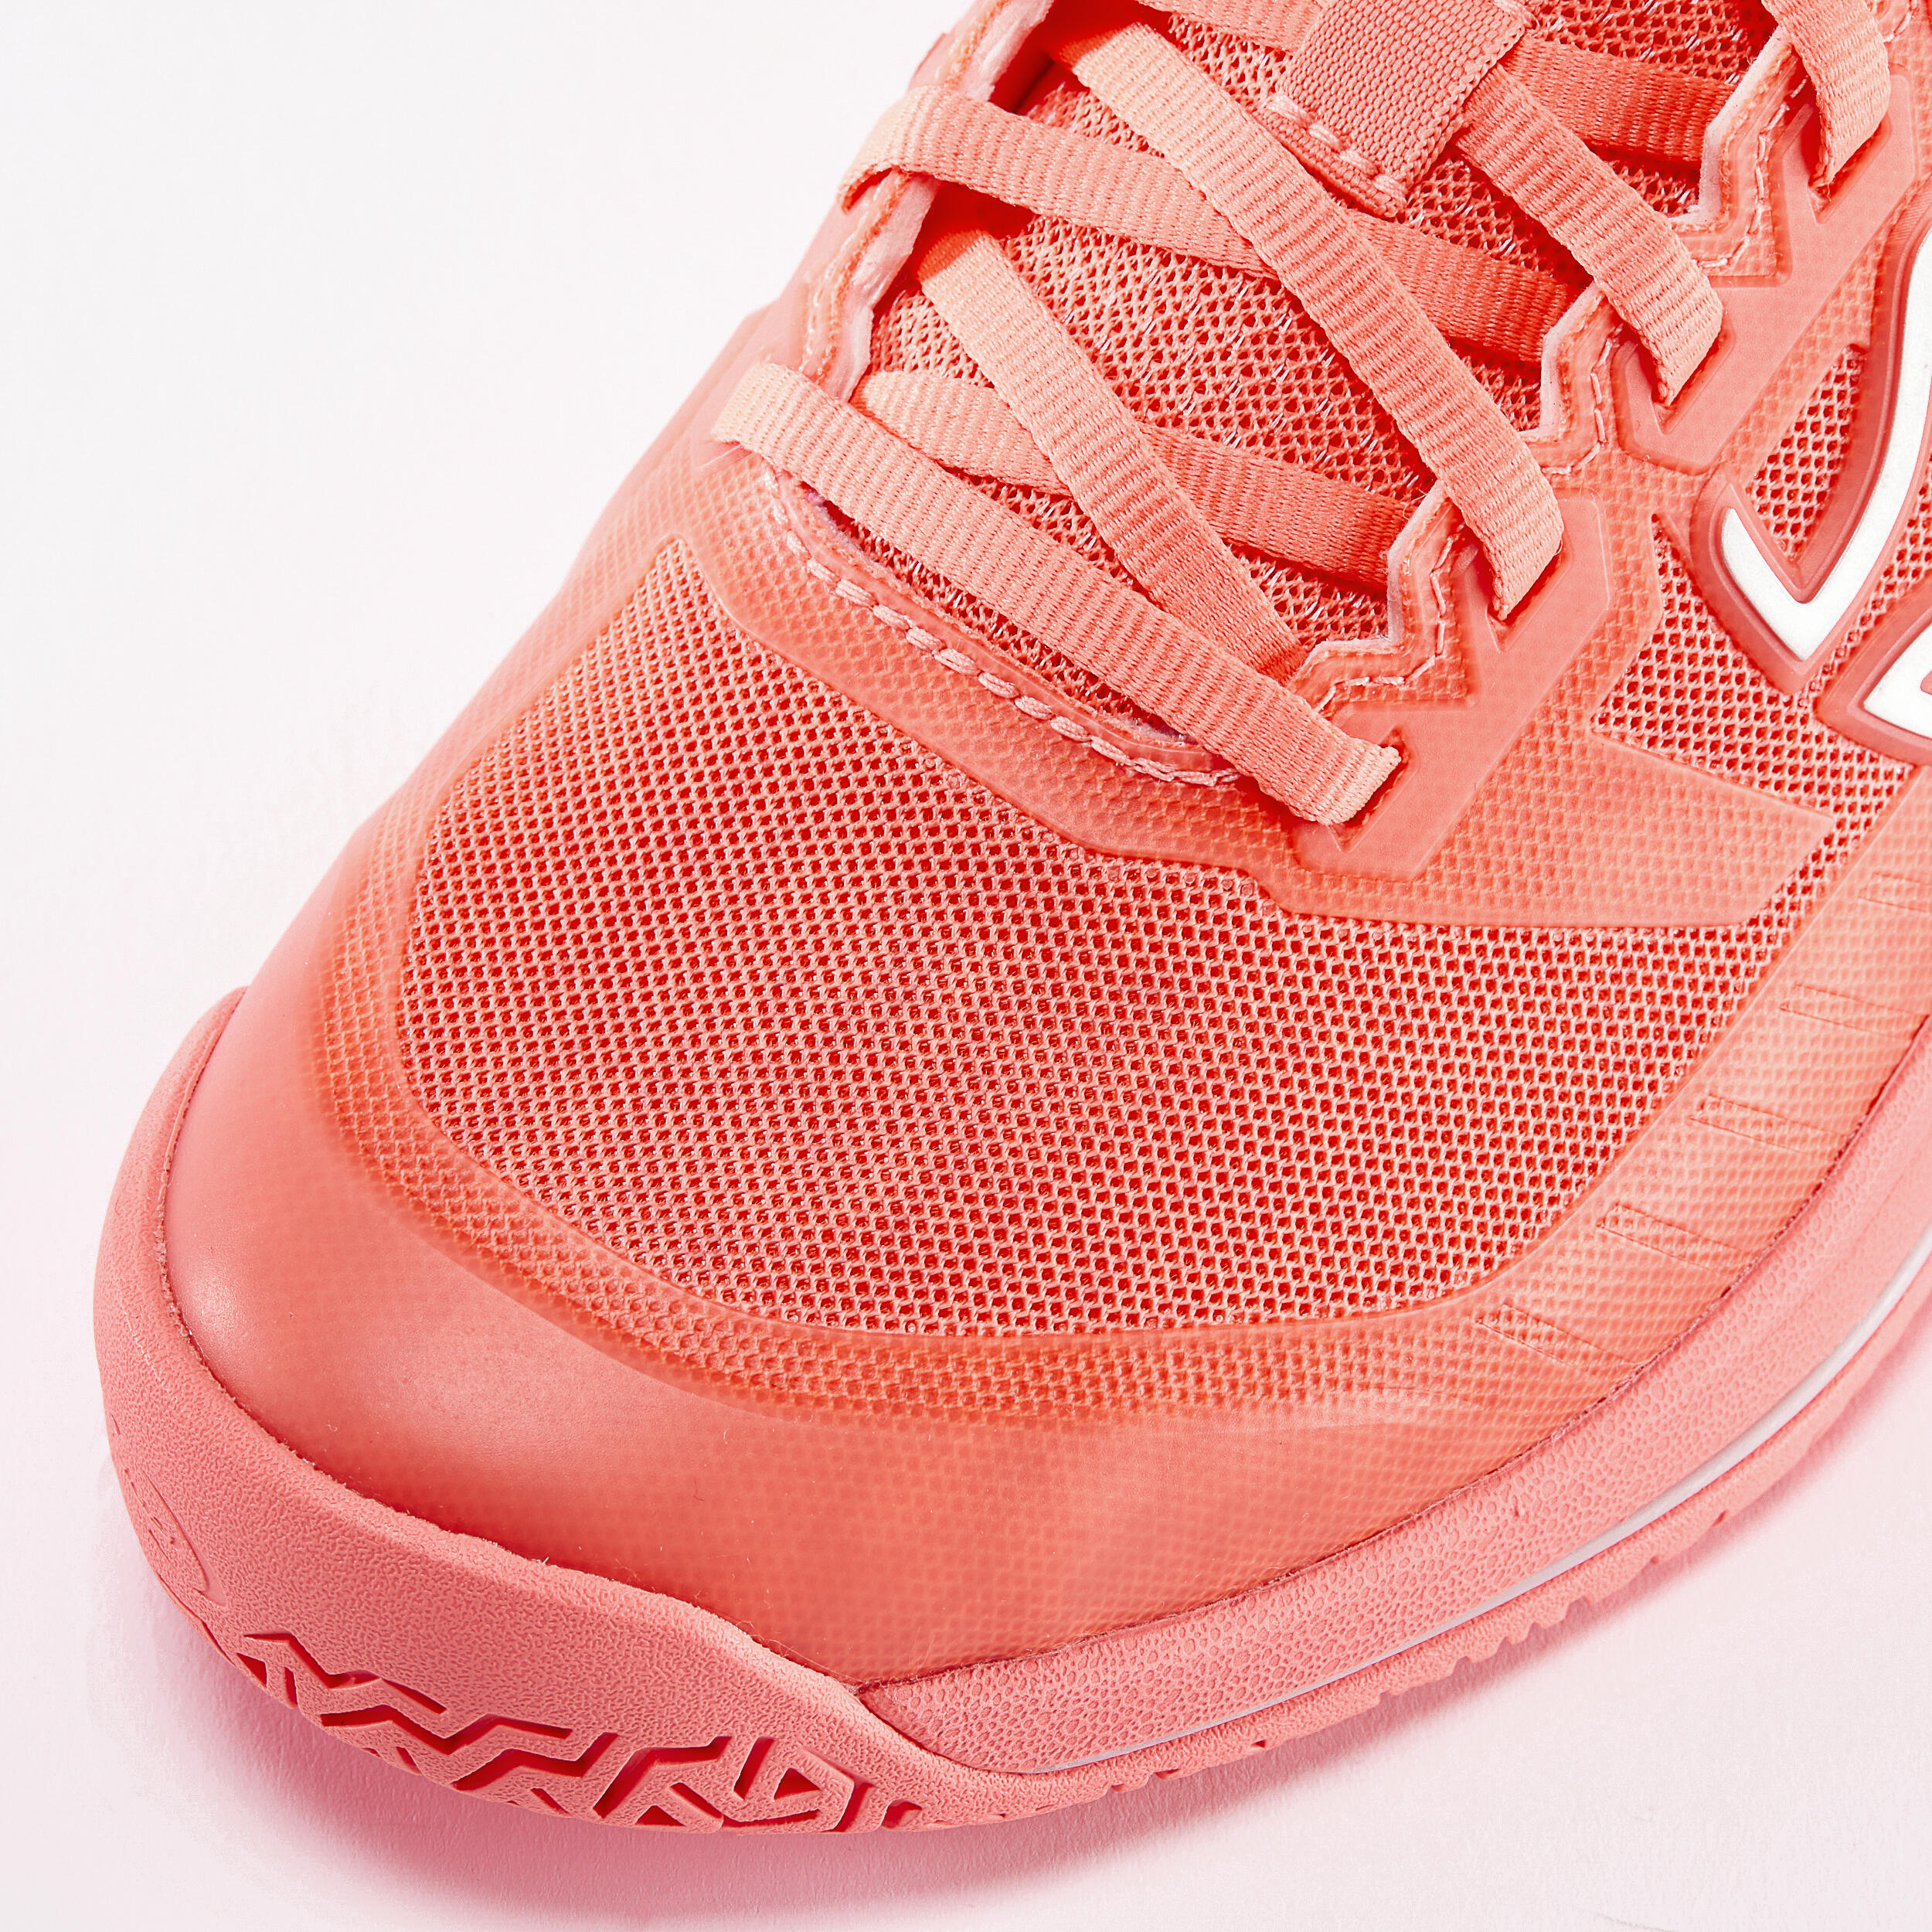 Women's Tennis Shoes TS990 - Coral 6/8